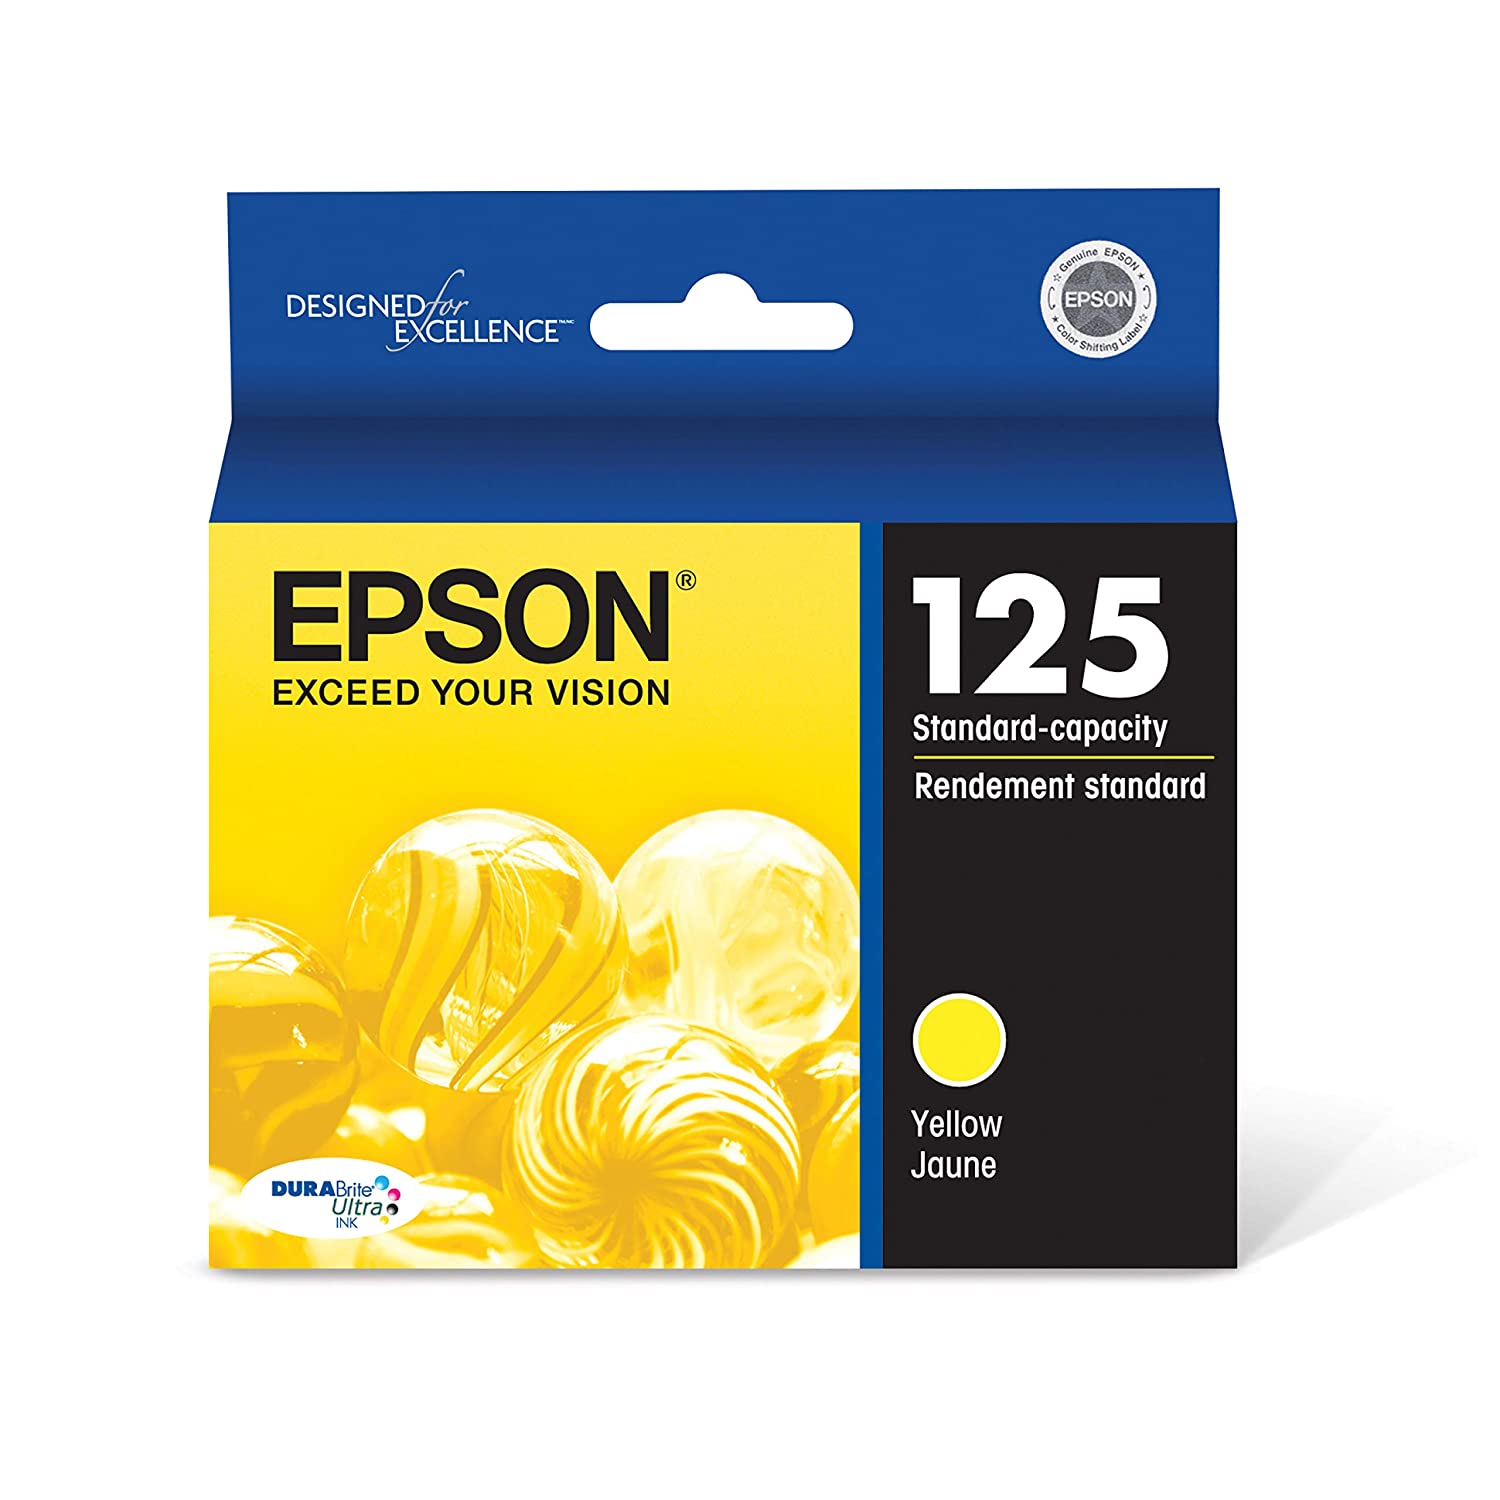 Absolute Toner Epson 125 Original Genuine OEM Durabrite Yellow Ink Cartridge | T125420S Orignal Epson Cartridges